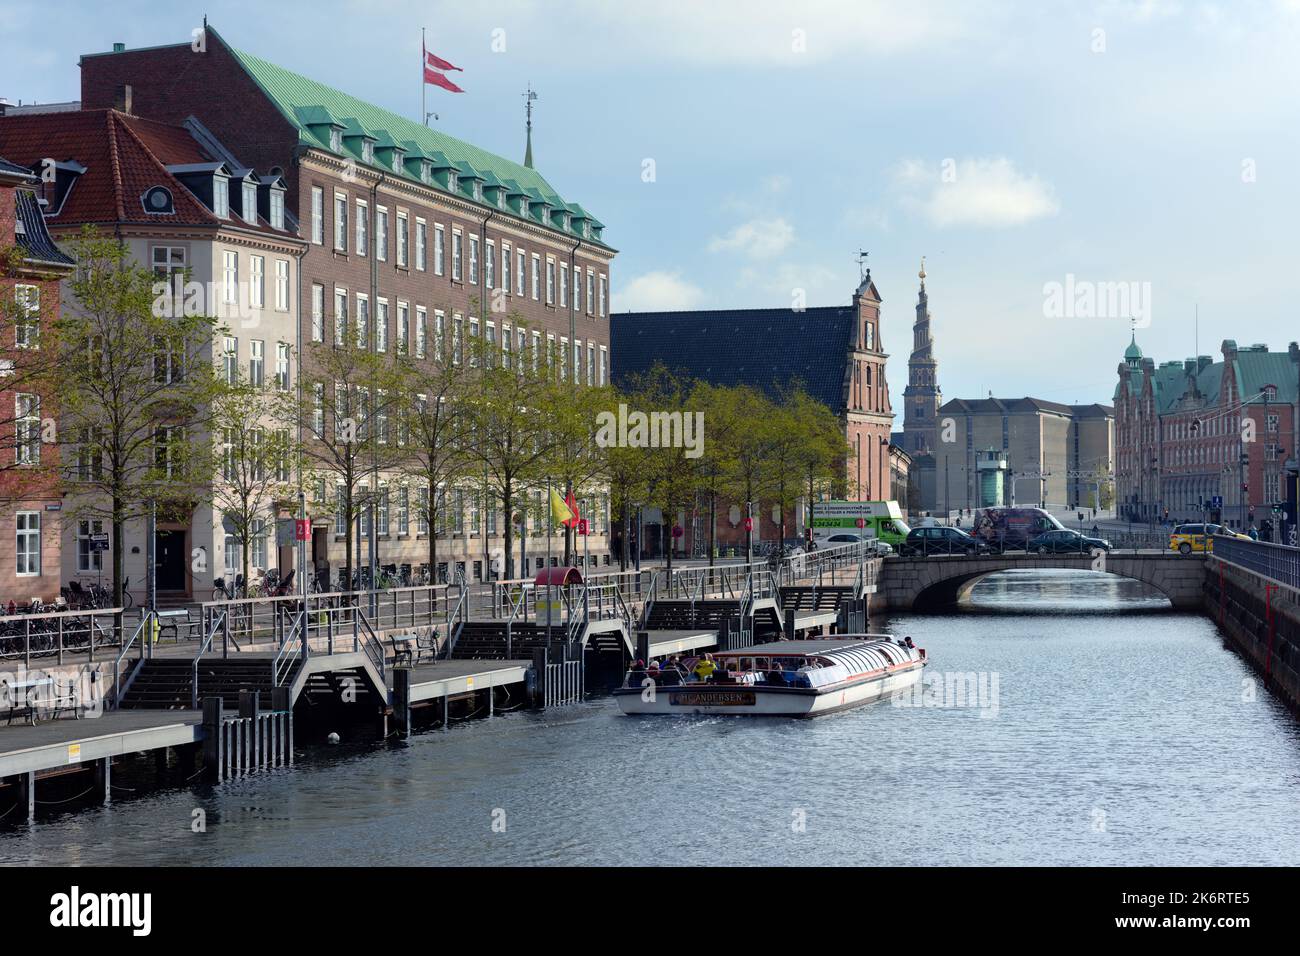 Sightseeing tour boat in Slotsholmen canal, Copenhagen, Denmark Stock Photo